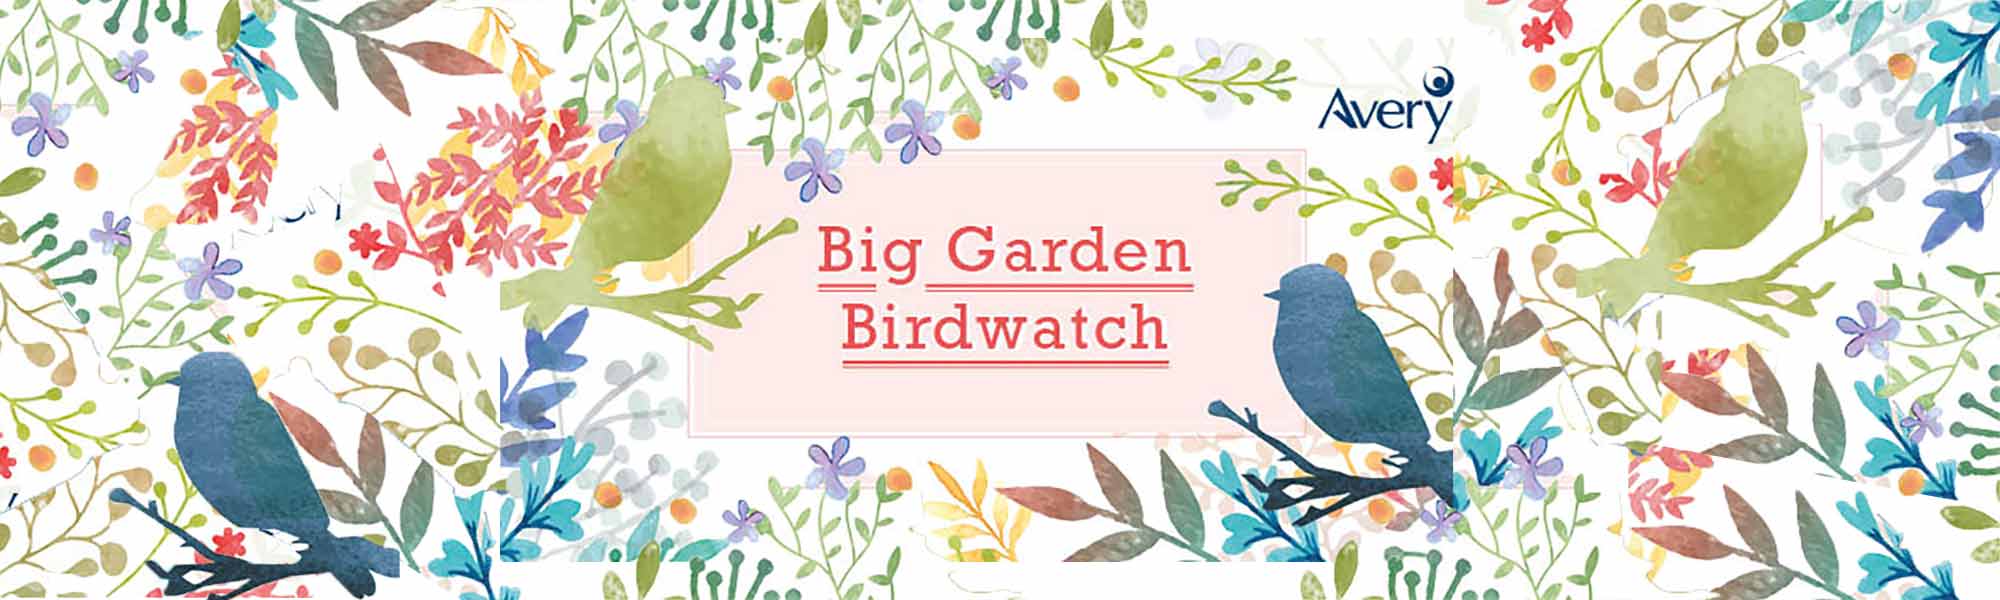 Big Garden Birdwatch banner hero